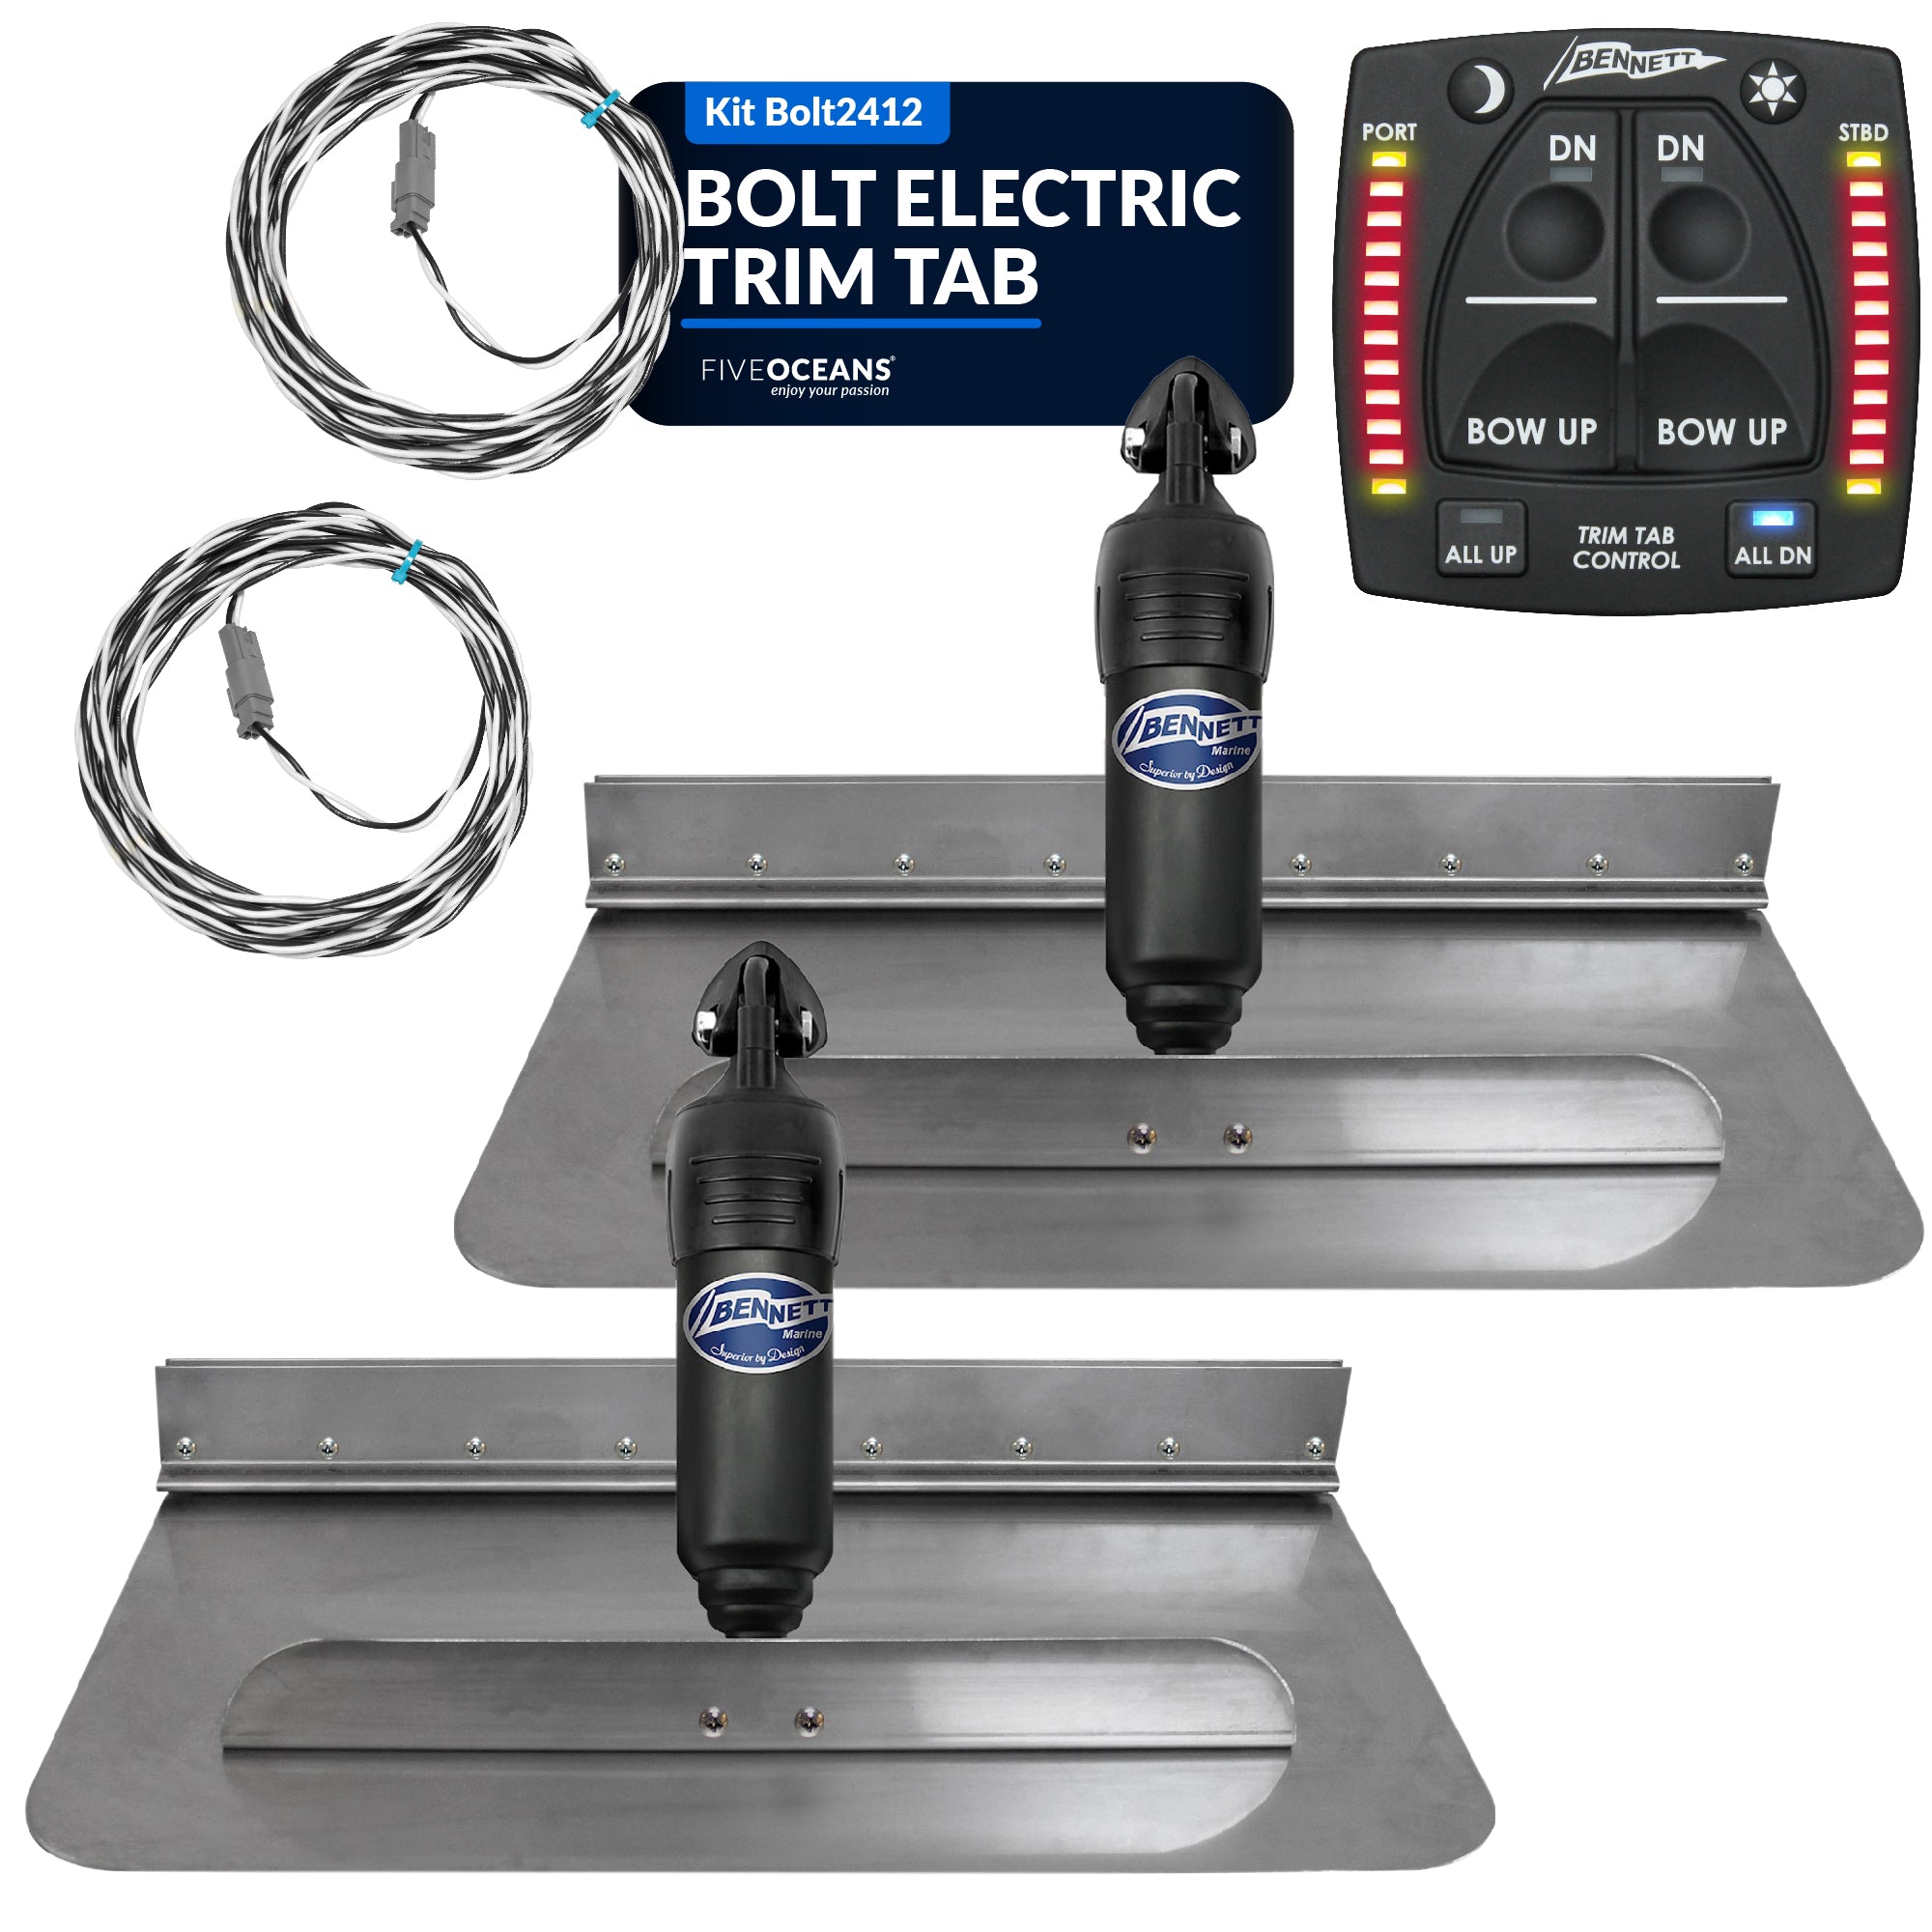 Bolt Electric Trim Tab System 24" x 12", Complete Kit BOLT2412, 12V DC - FO4585